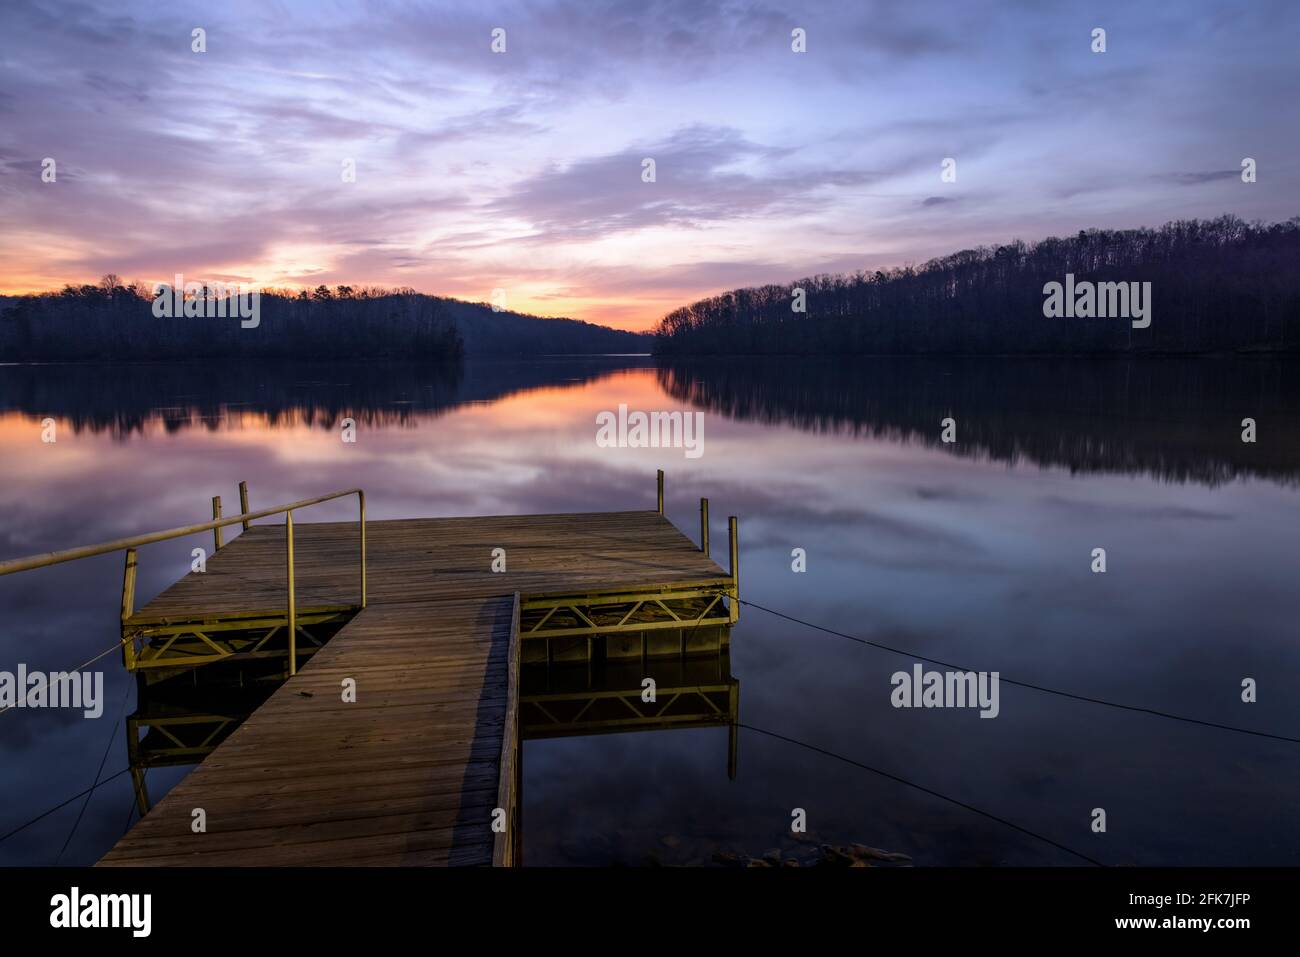 Sunrise - Wahoo Creek Park,Lake Sidney Lanier - Hall County,Georgia. A new day begins on the calm waters of Lake Sidney Lanier. Stock Photo